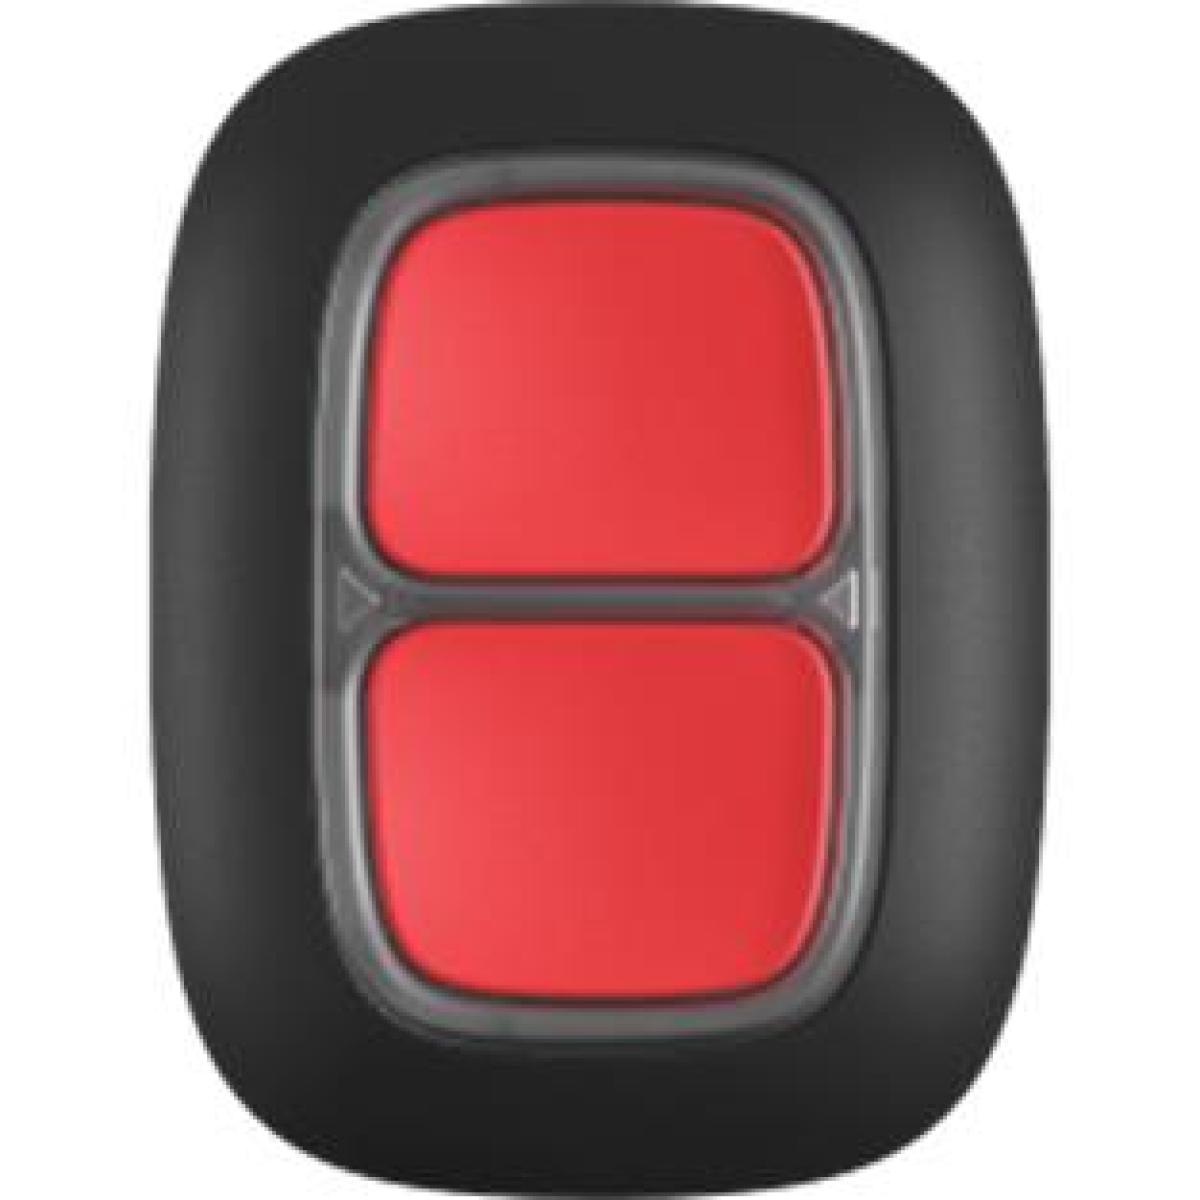 AJAX Wireless Double Button- Black